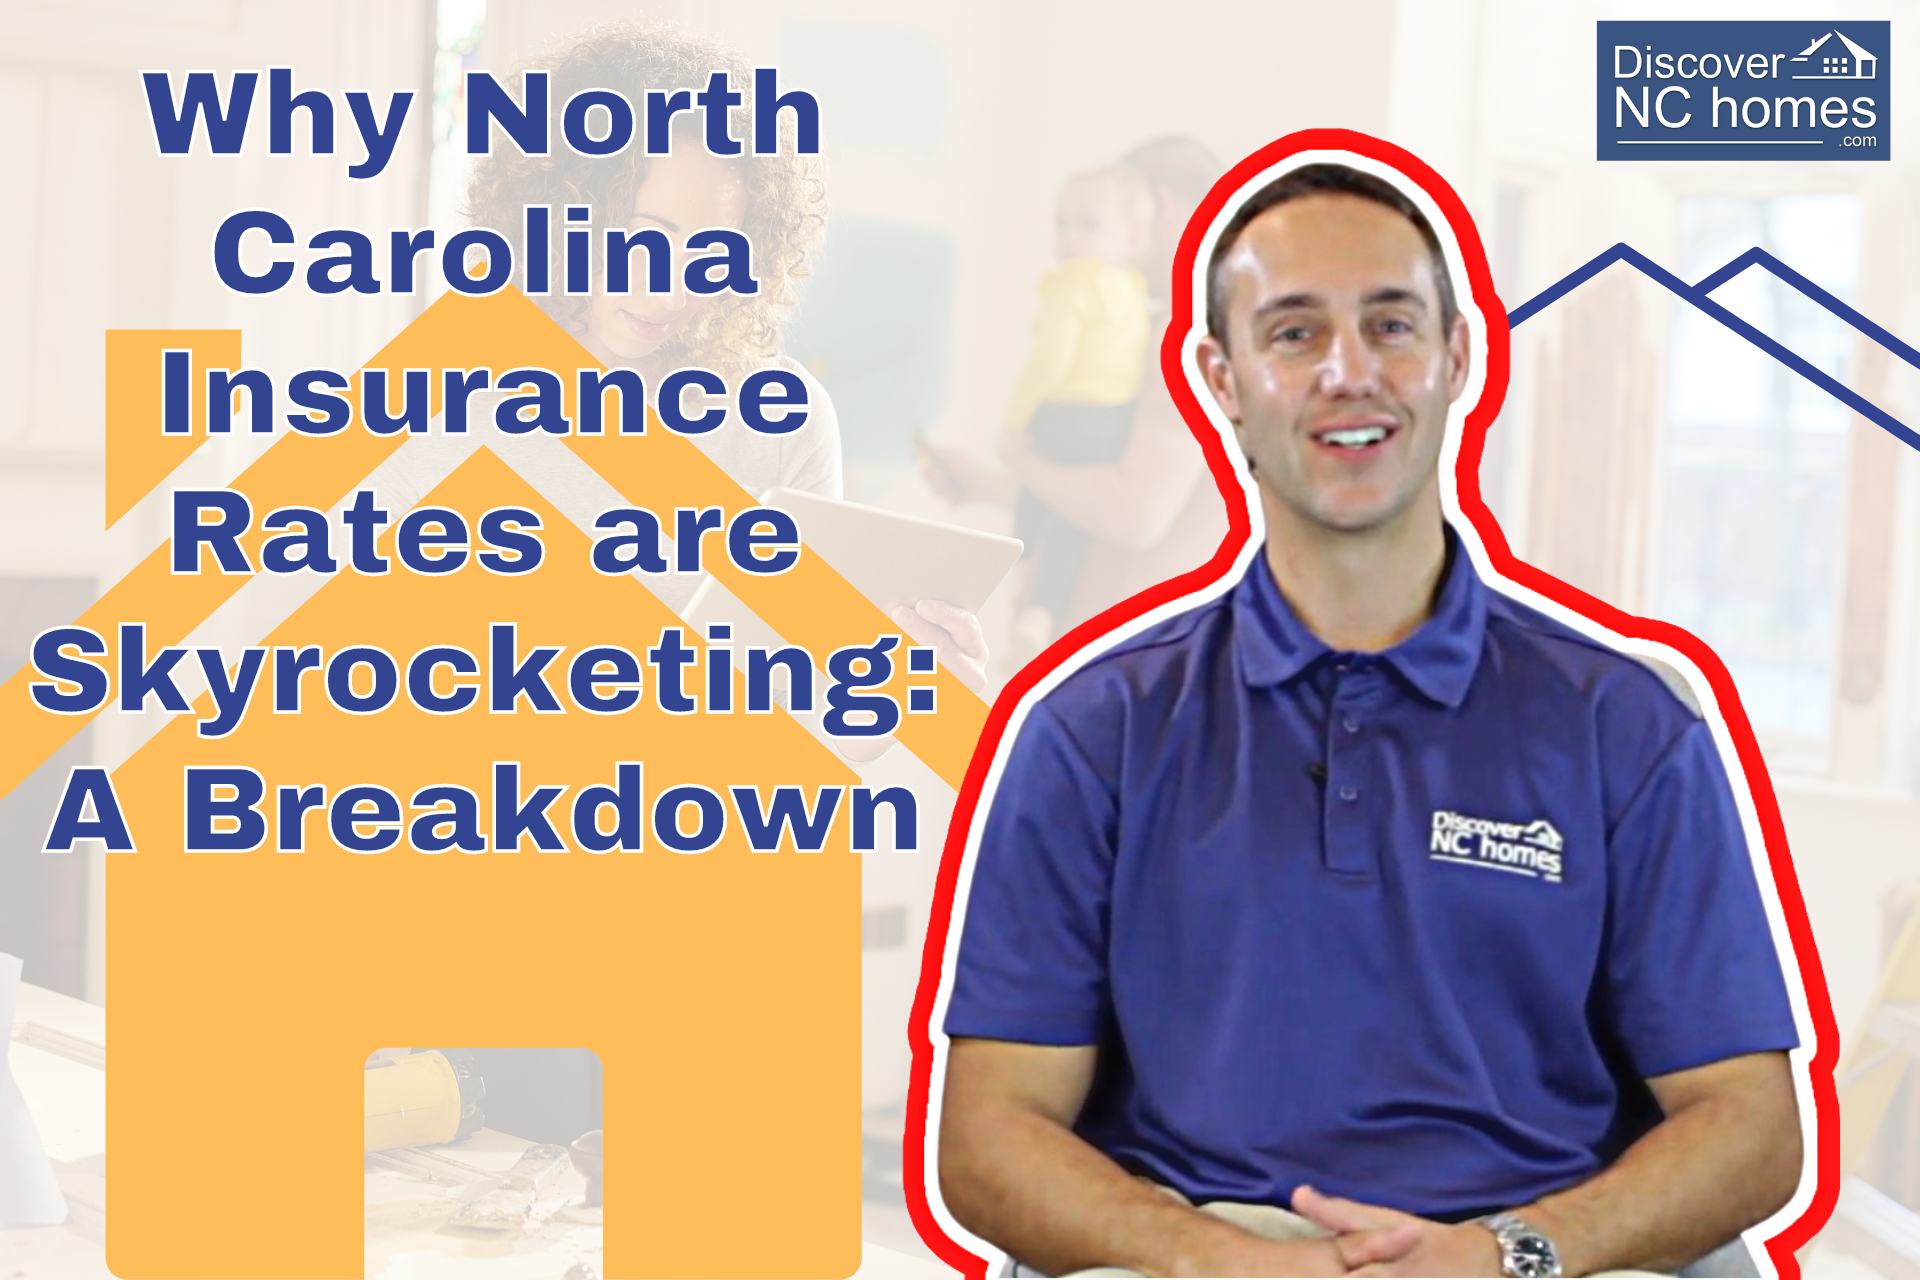 Why North Carolina Insurance Rates are Skyrocketing: A Breakdown